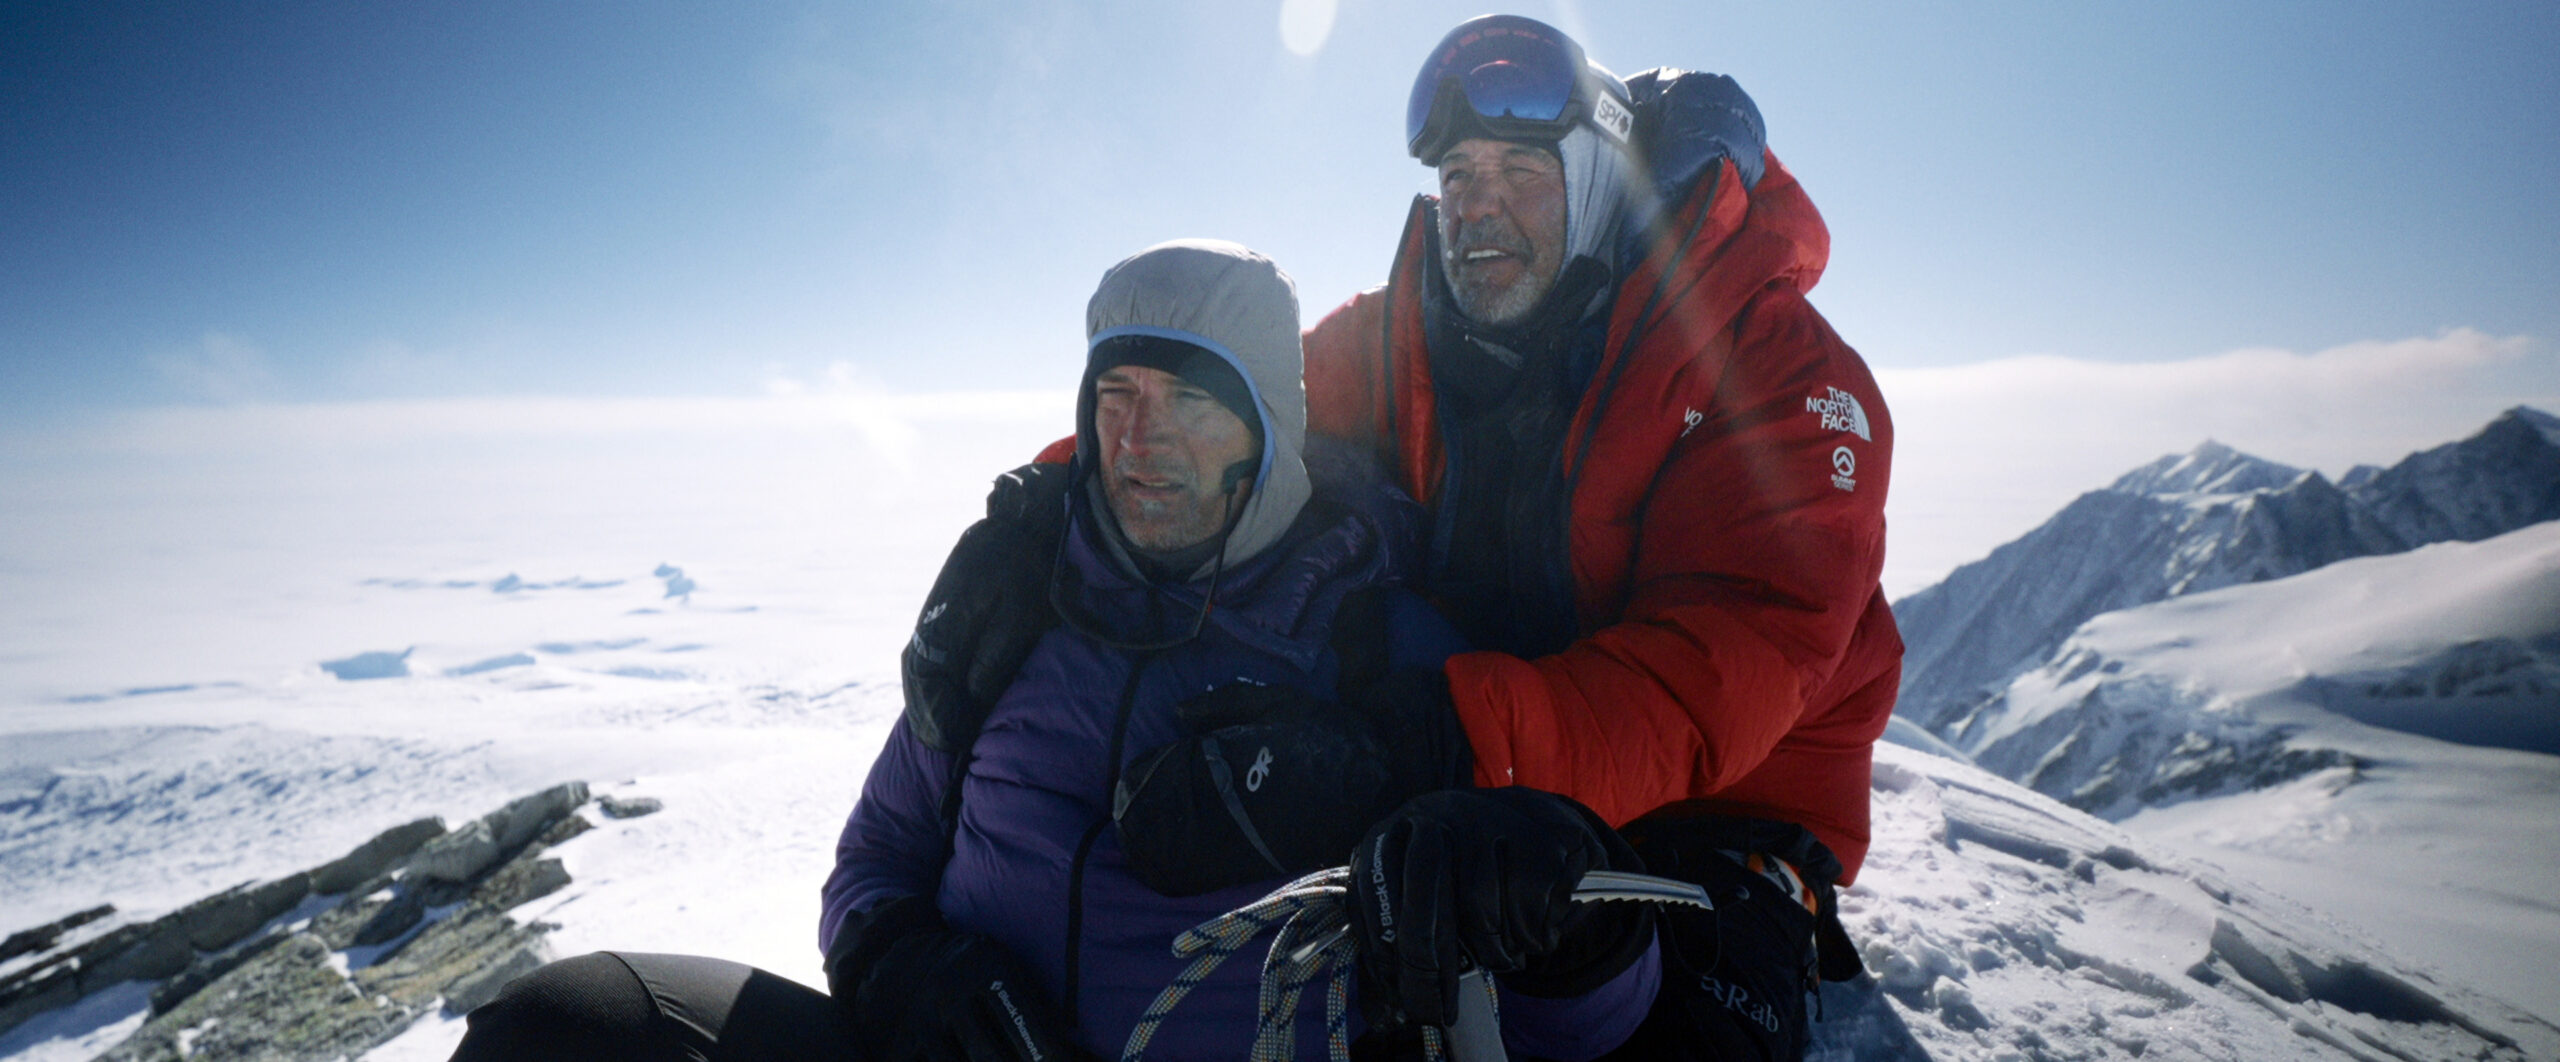 John Leonard and Todd Hoffman mountain climbing in 